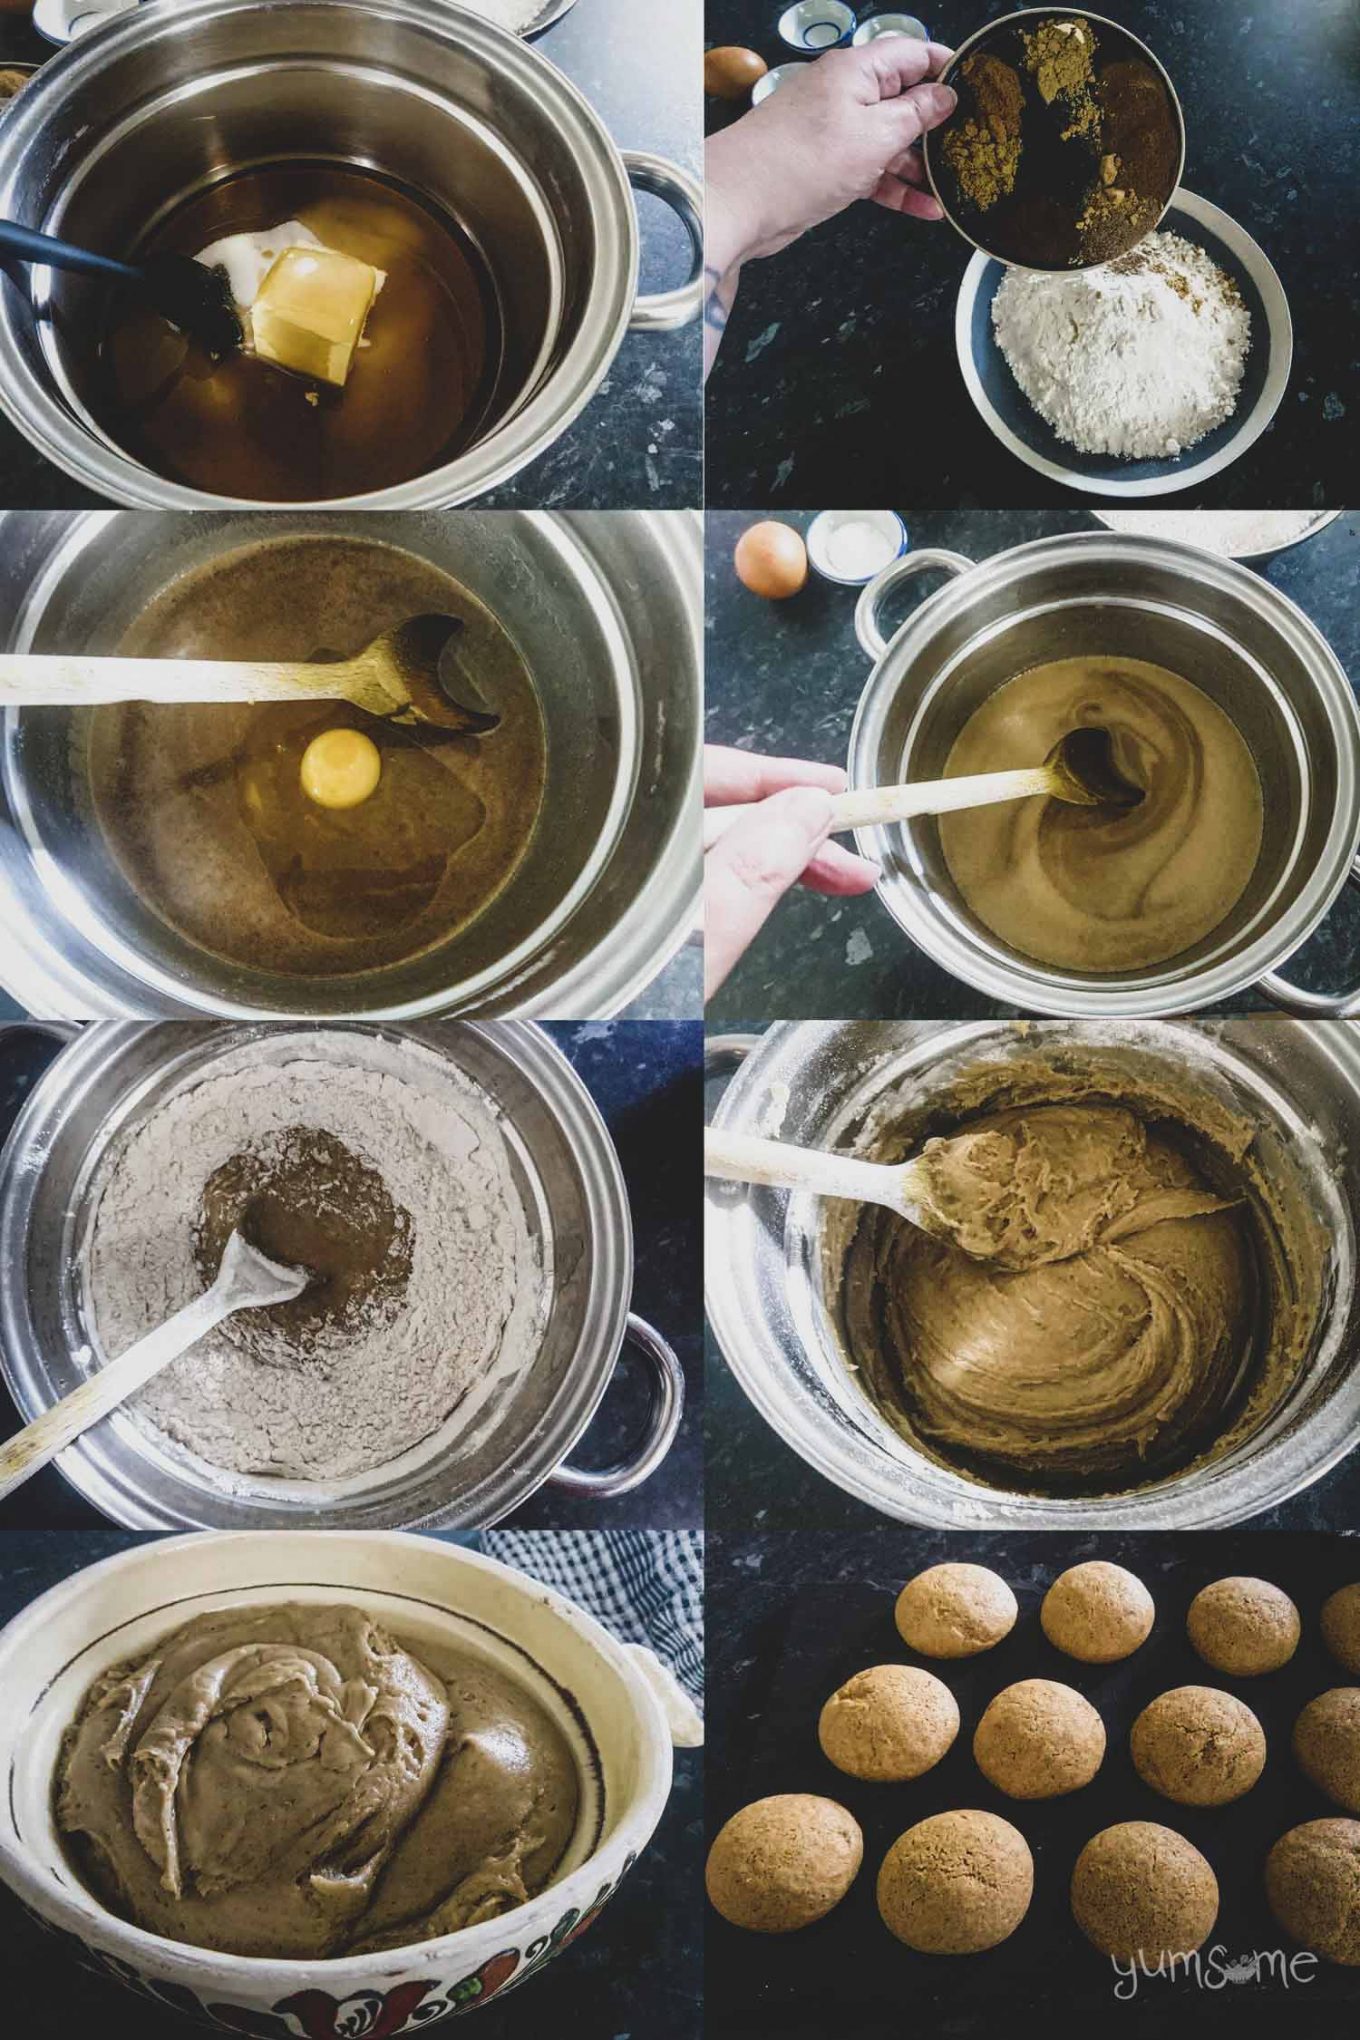 Process shots of how to make pryaniki.